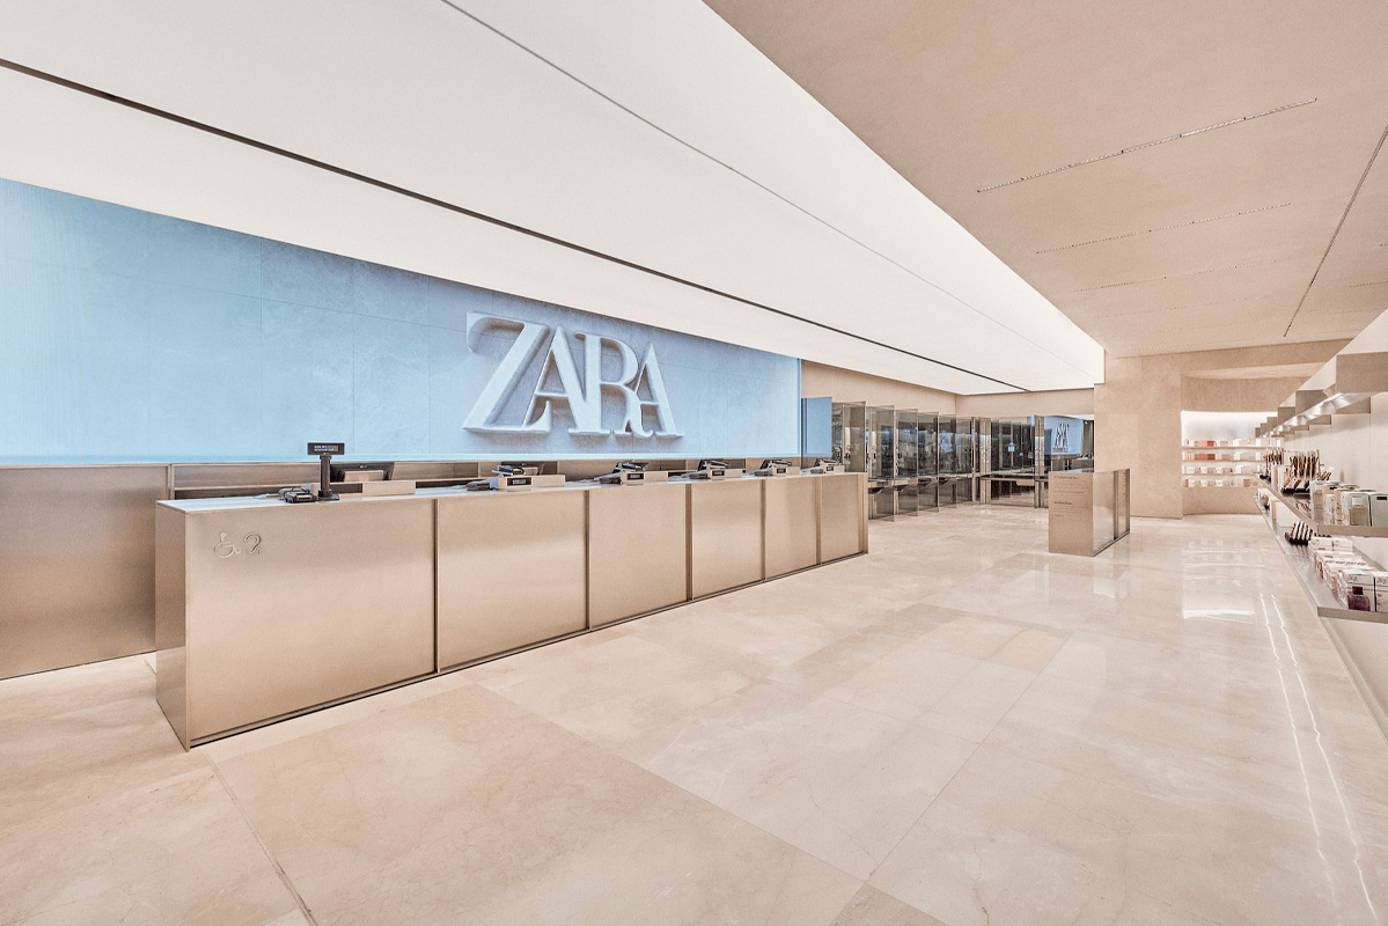 Zara Canada being investigated by ethics watchdog over alleged